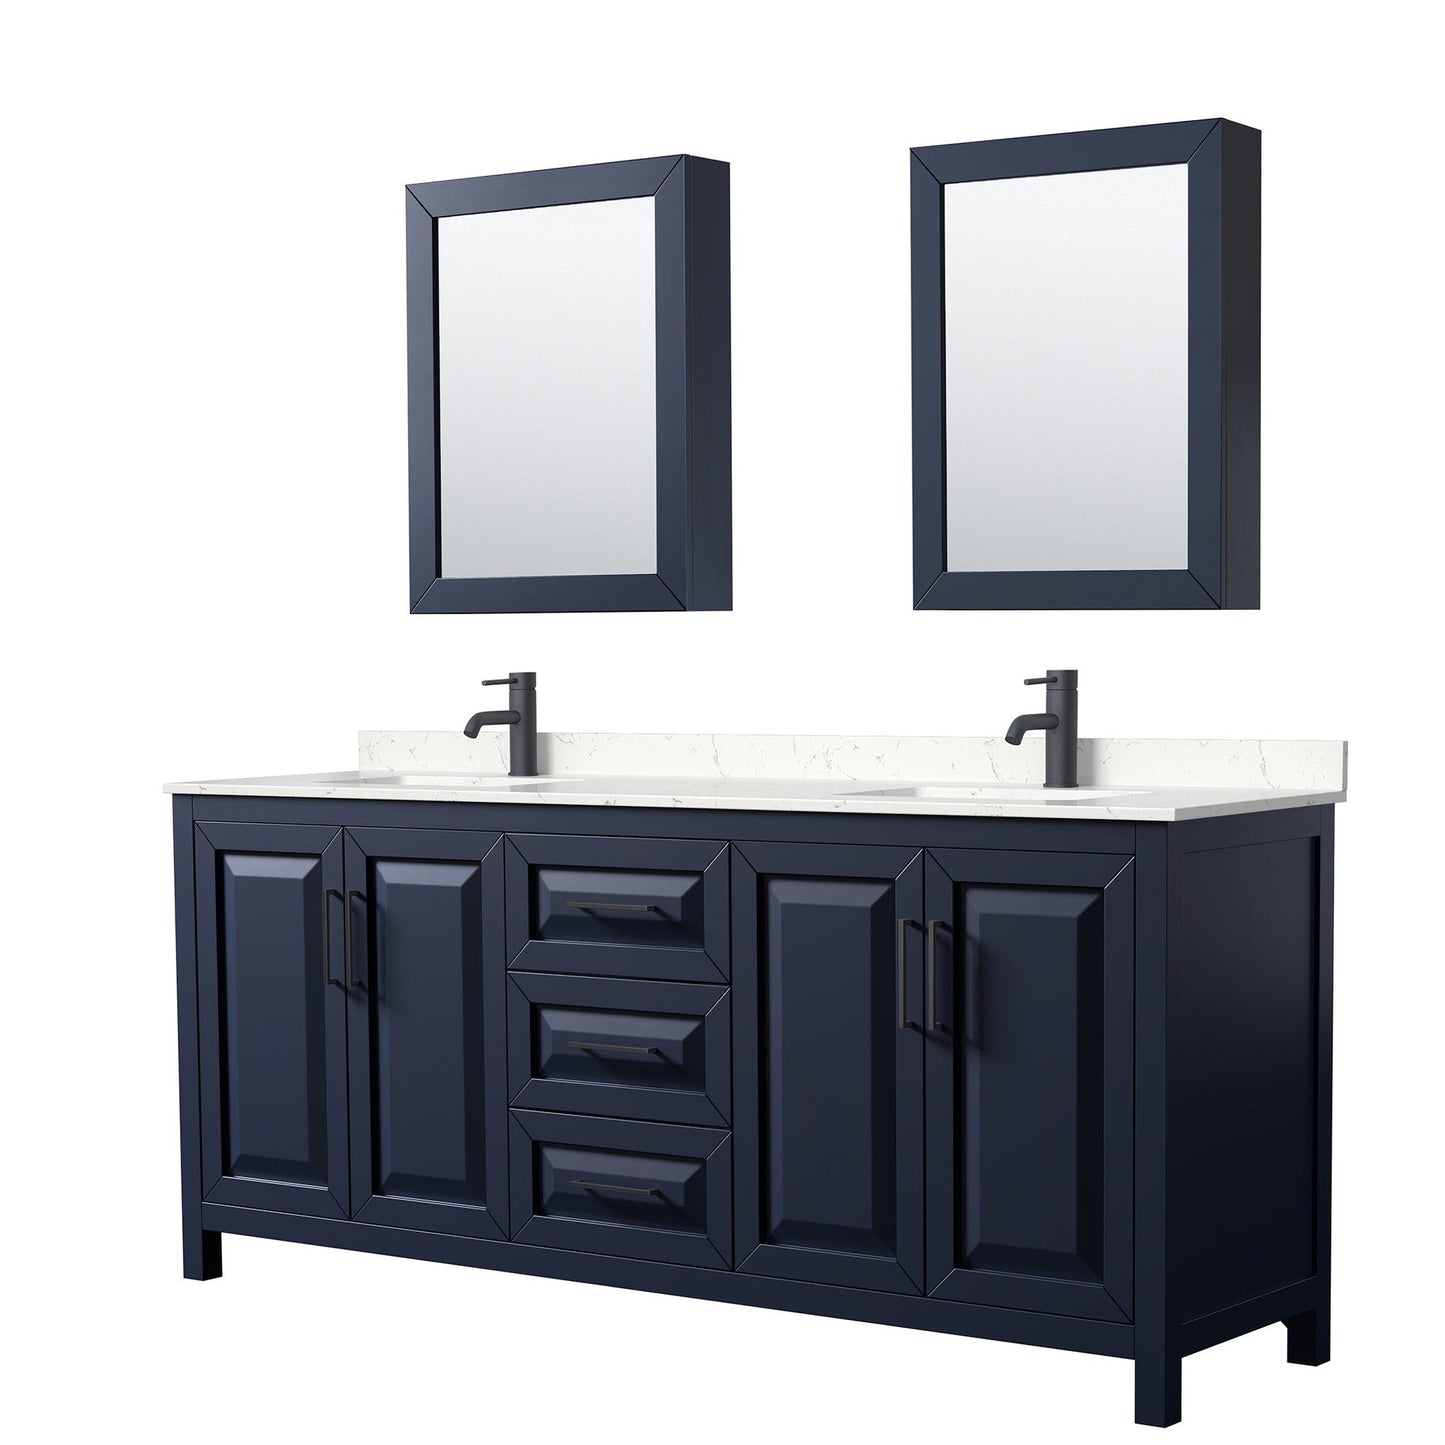 Daria 80" Double Bathroom Vanity in Dark Blue, Carrara Cultured Marble Countertop, Undermount Square Sinks, Matte Black Trim, Medicine Cabinets